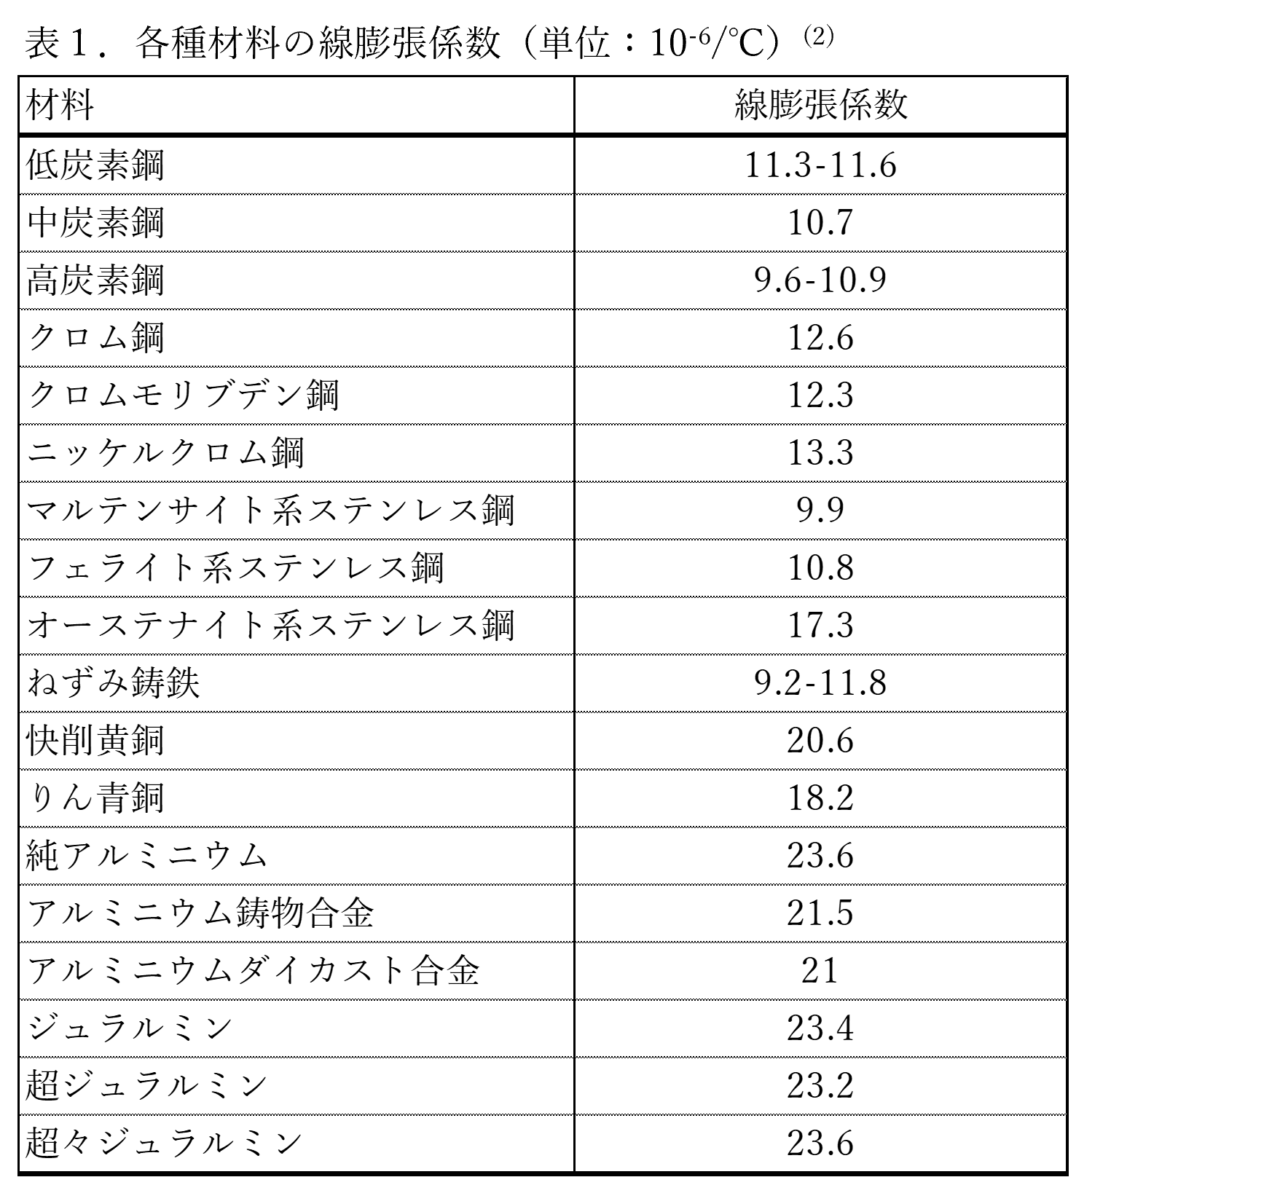 表１．各種材料の線膨張係数（単位：10^-6/℃）